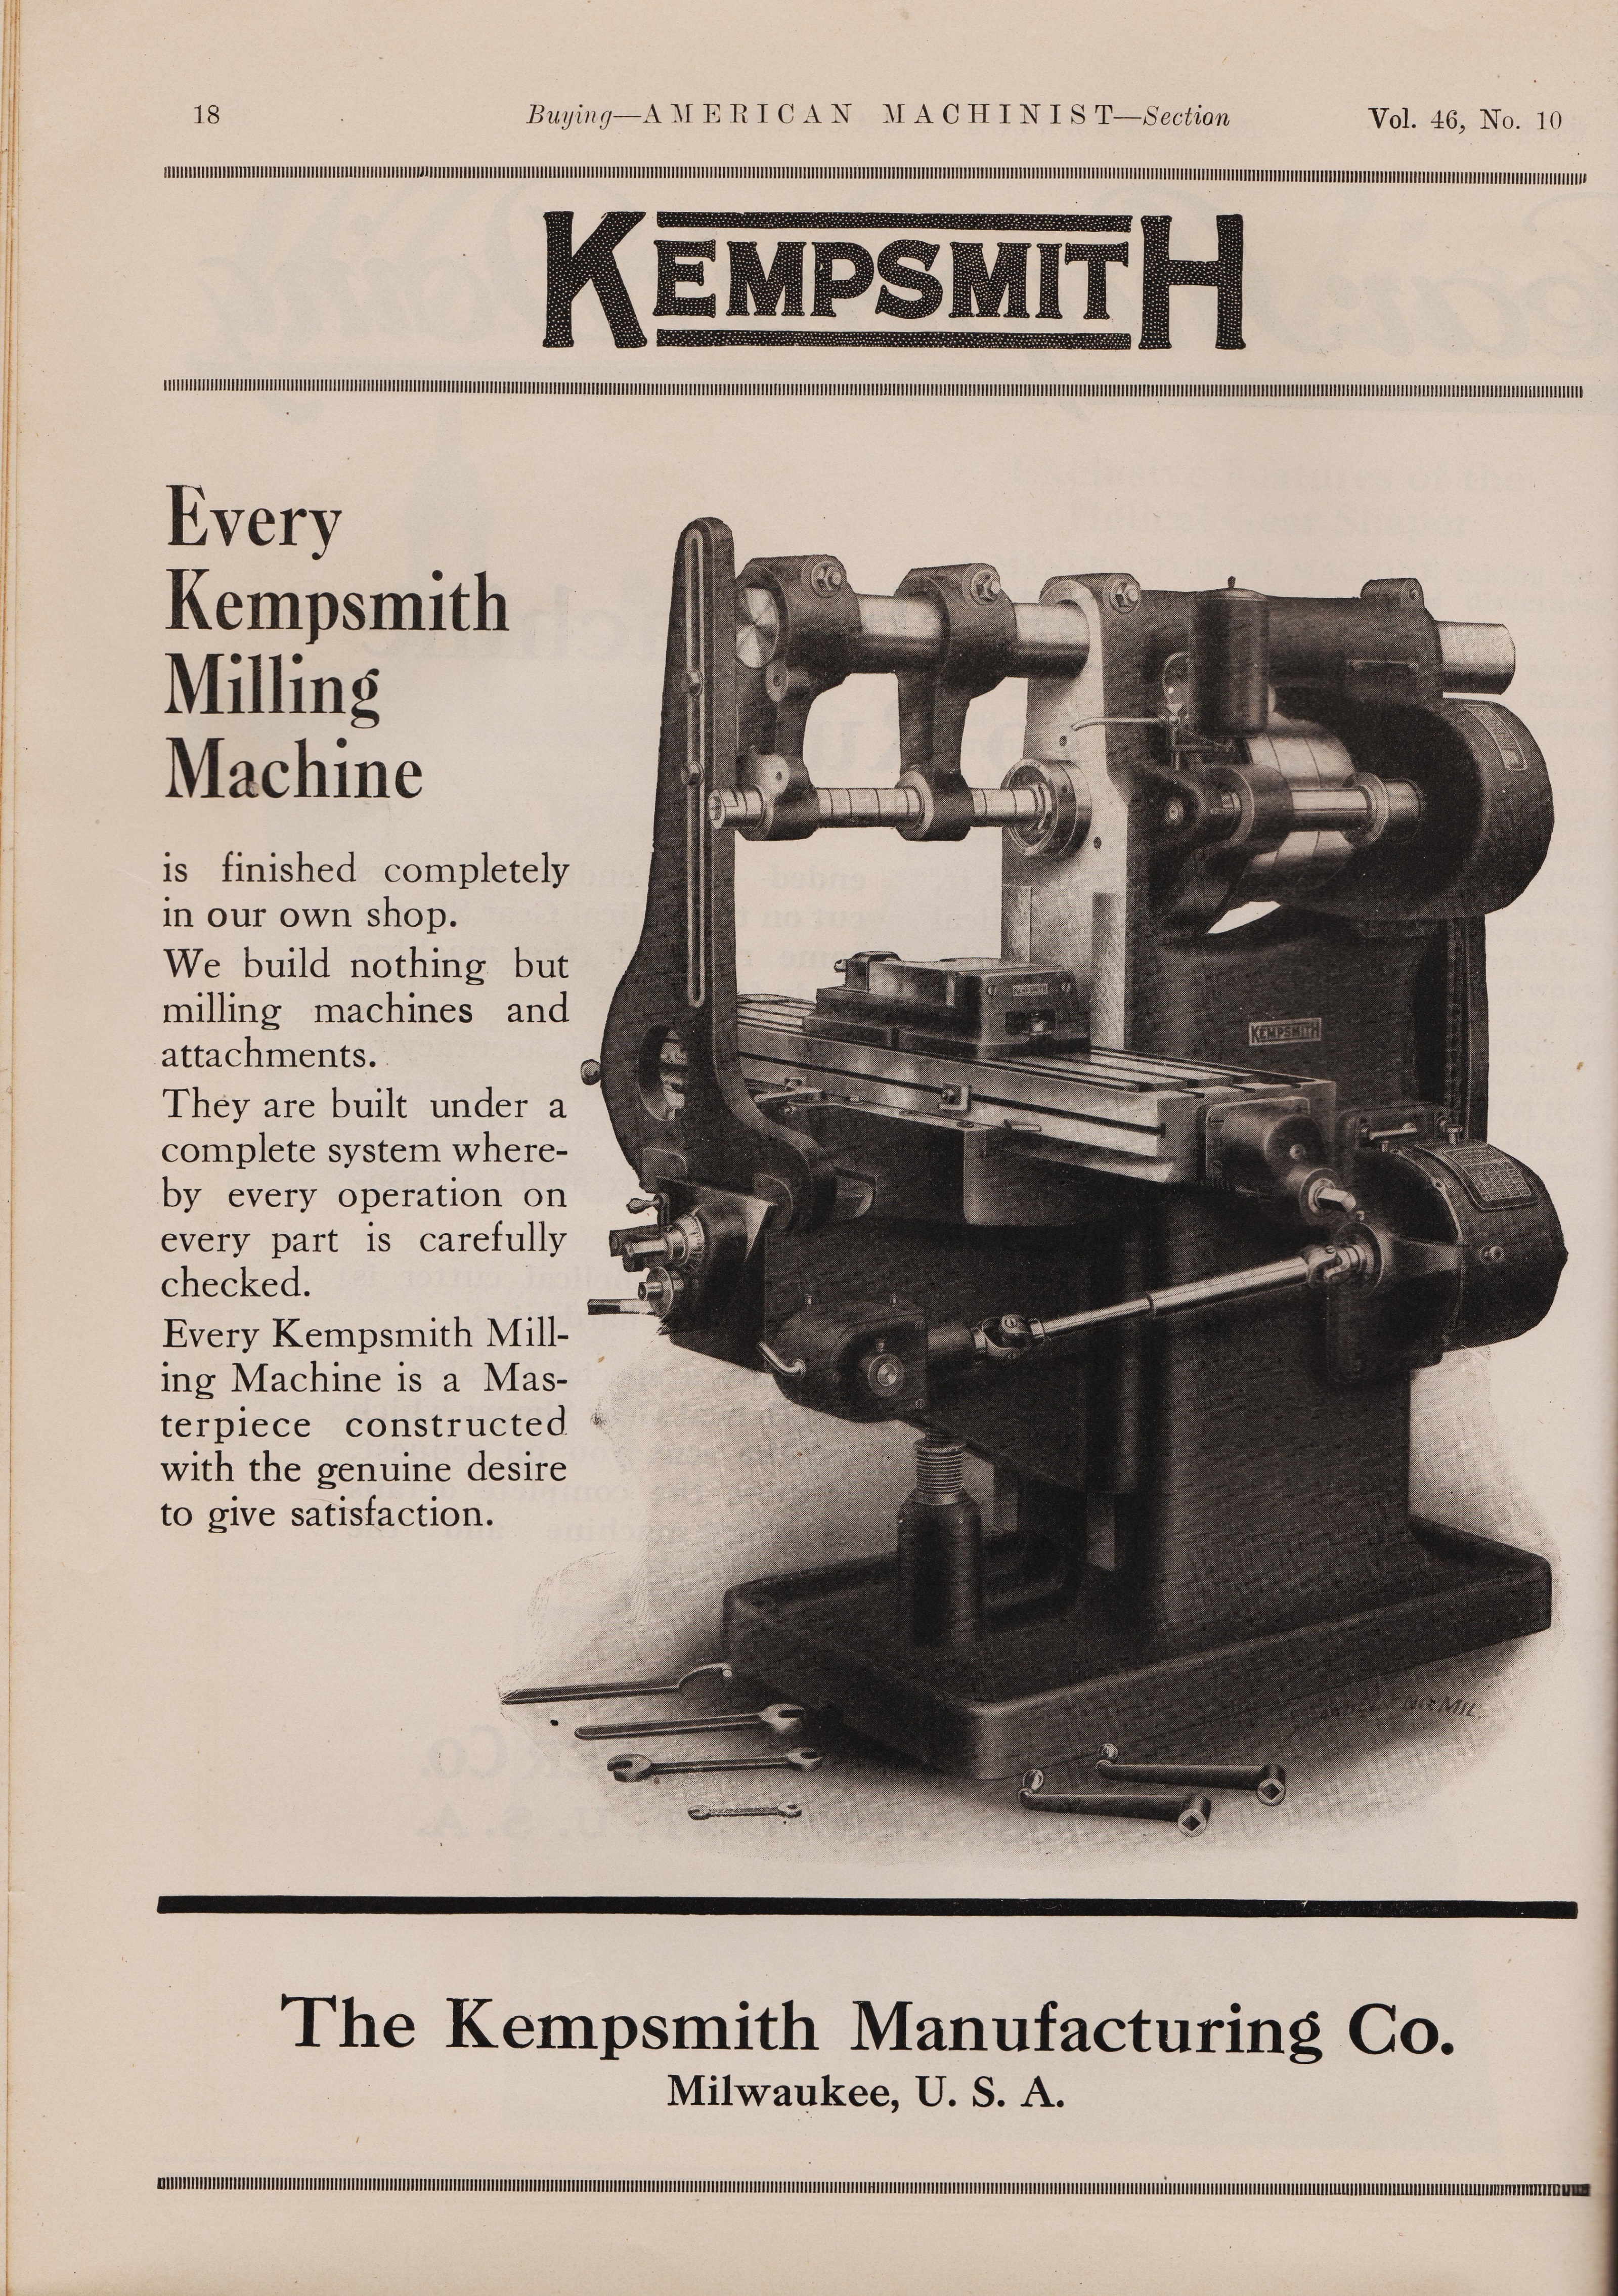 https://antiquemachinery.com/images-2021/American-Machinist-Magazine-June-1912-Kempsmith-Manufacturing-Co-Horizontal-Milling-Machine-95-per.jpg